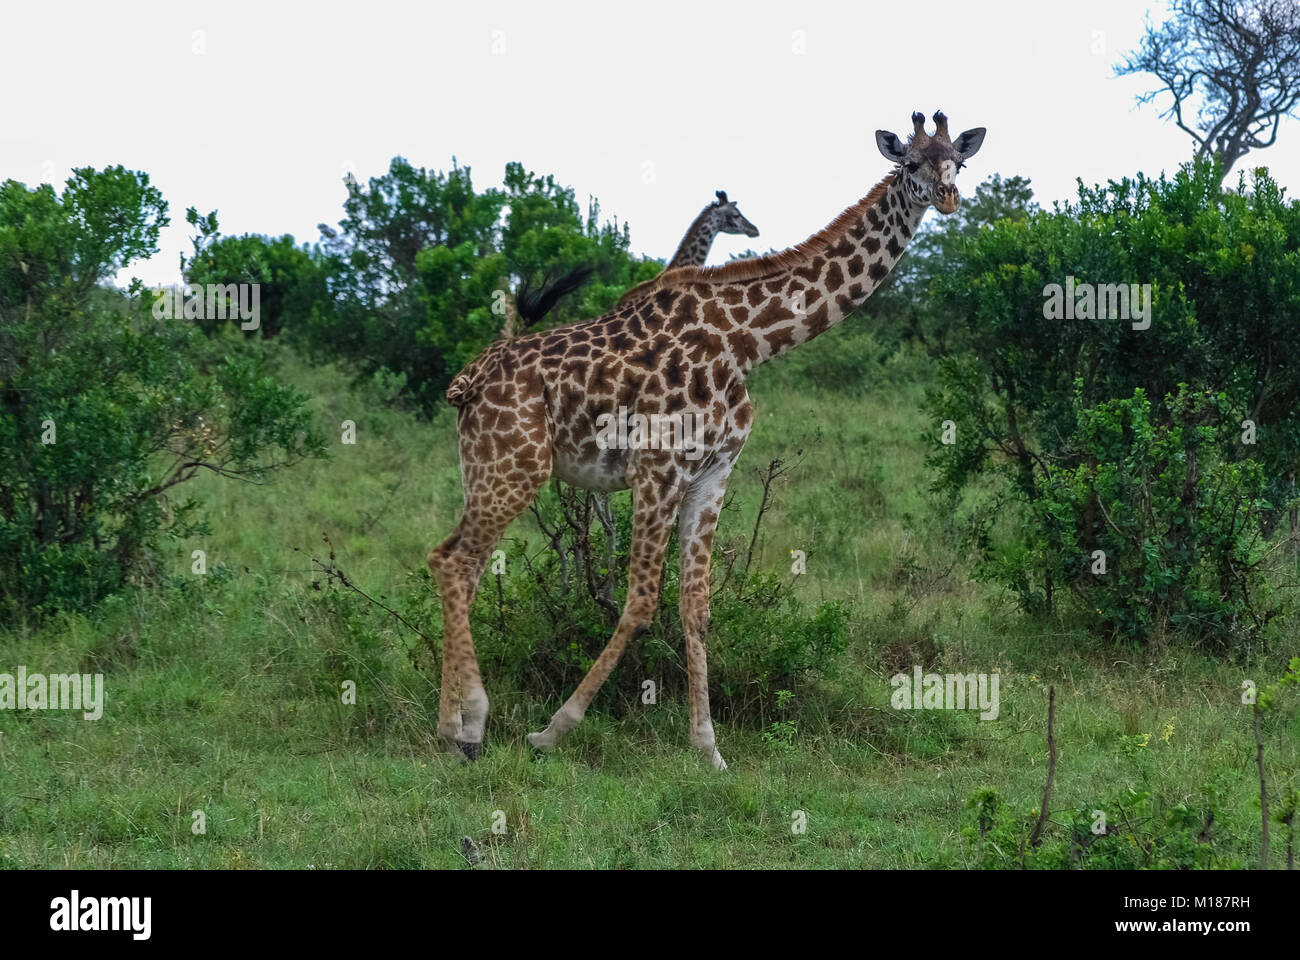 Girafe du Parc National de Masai Mara au Kenya Banque D'Images